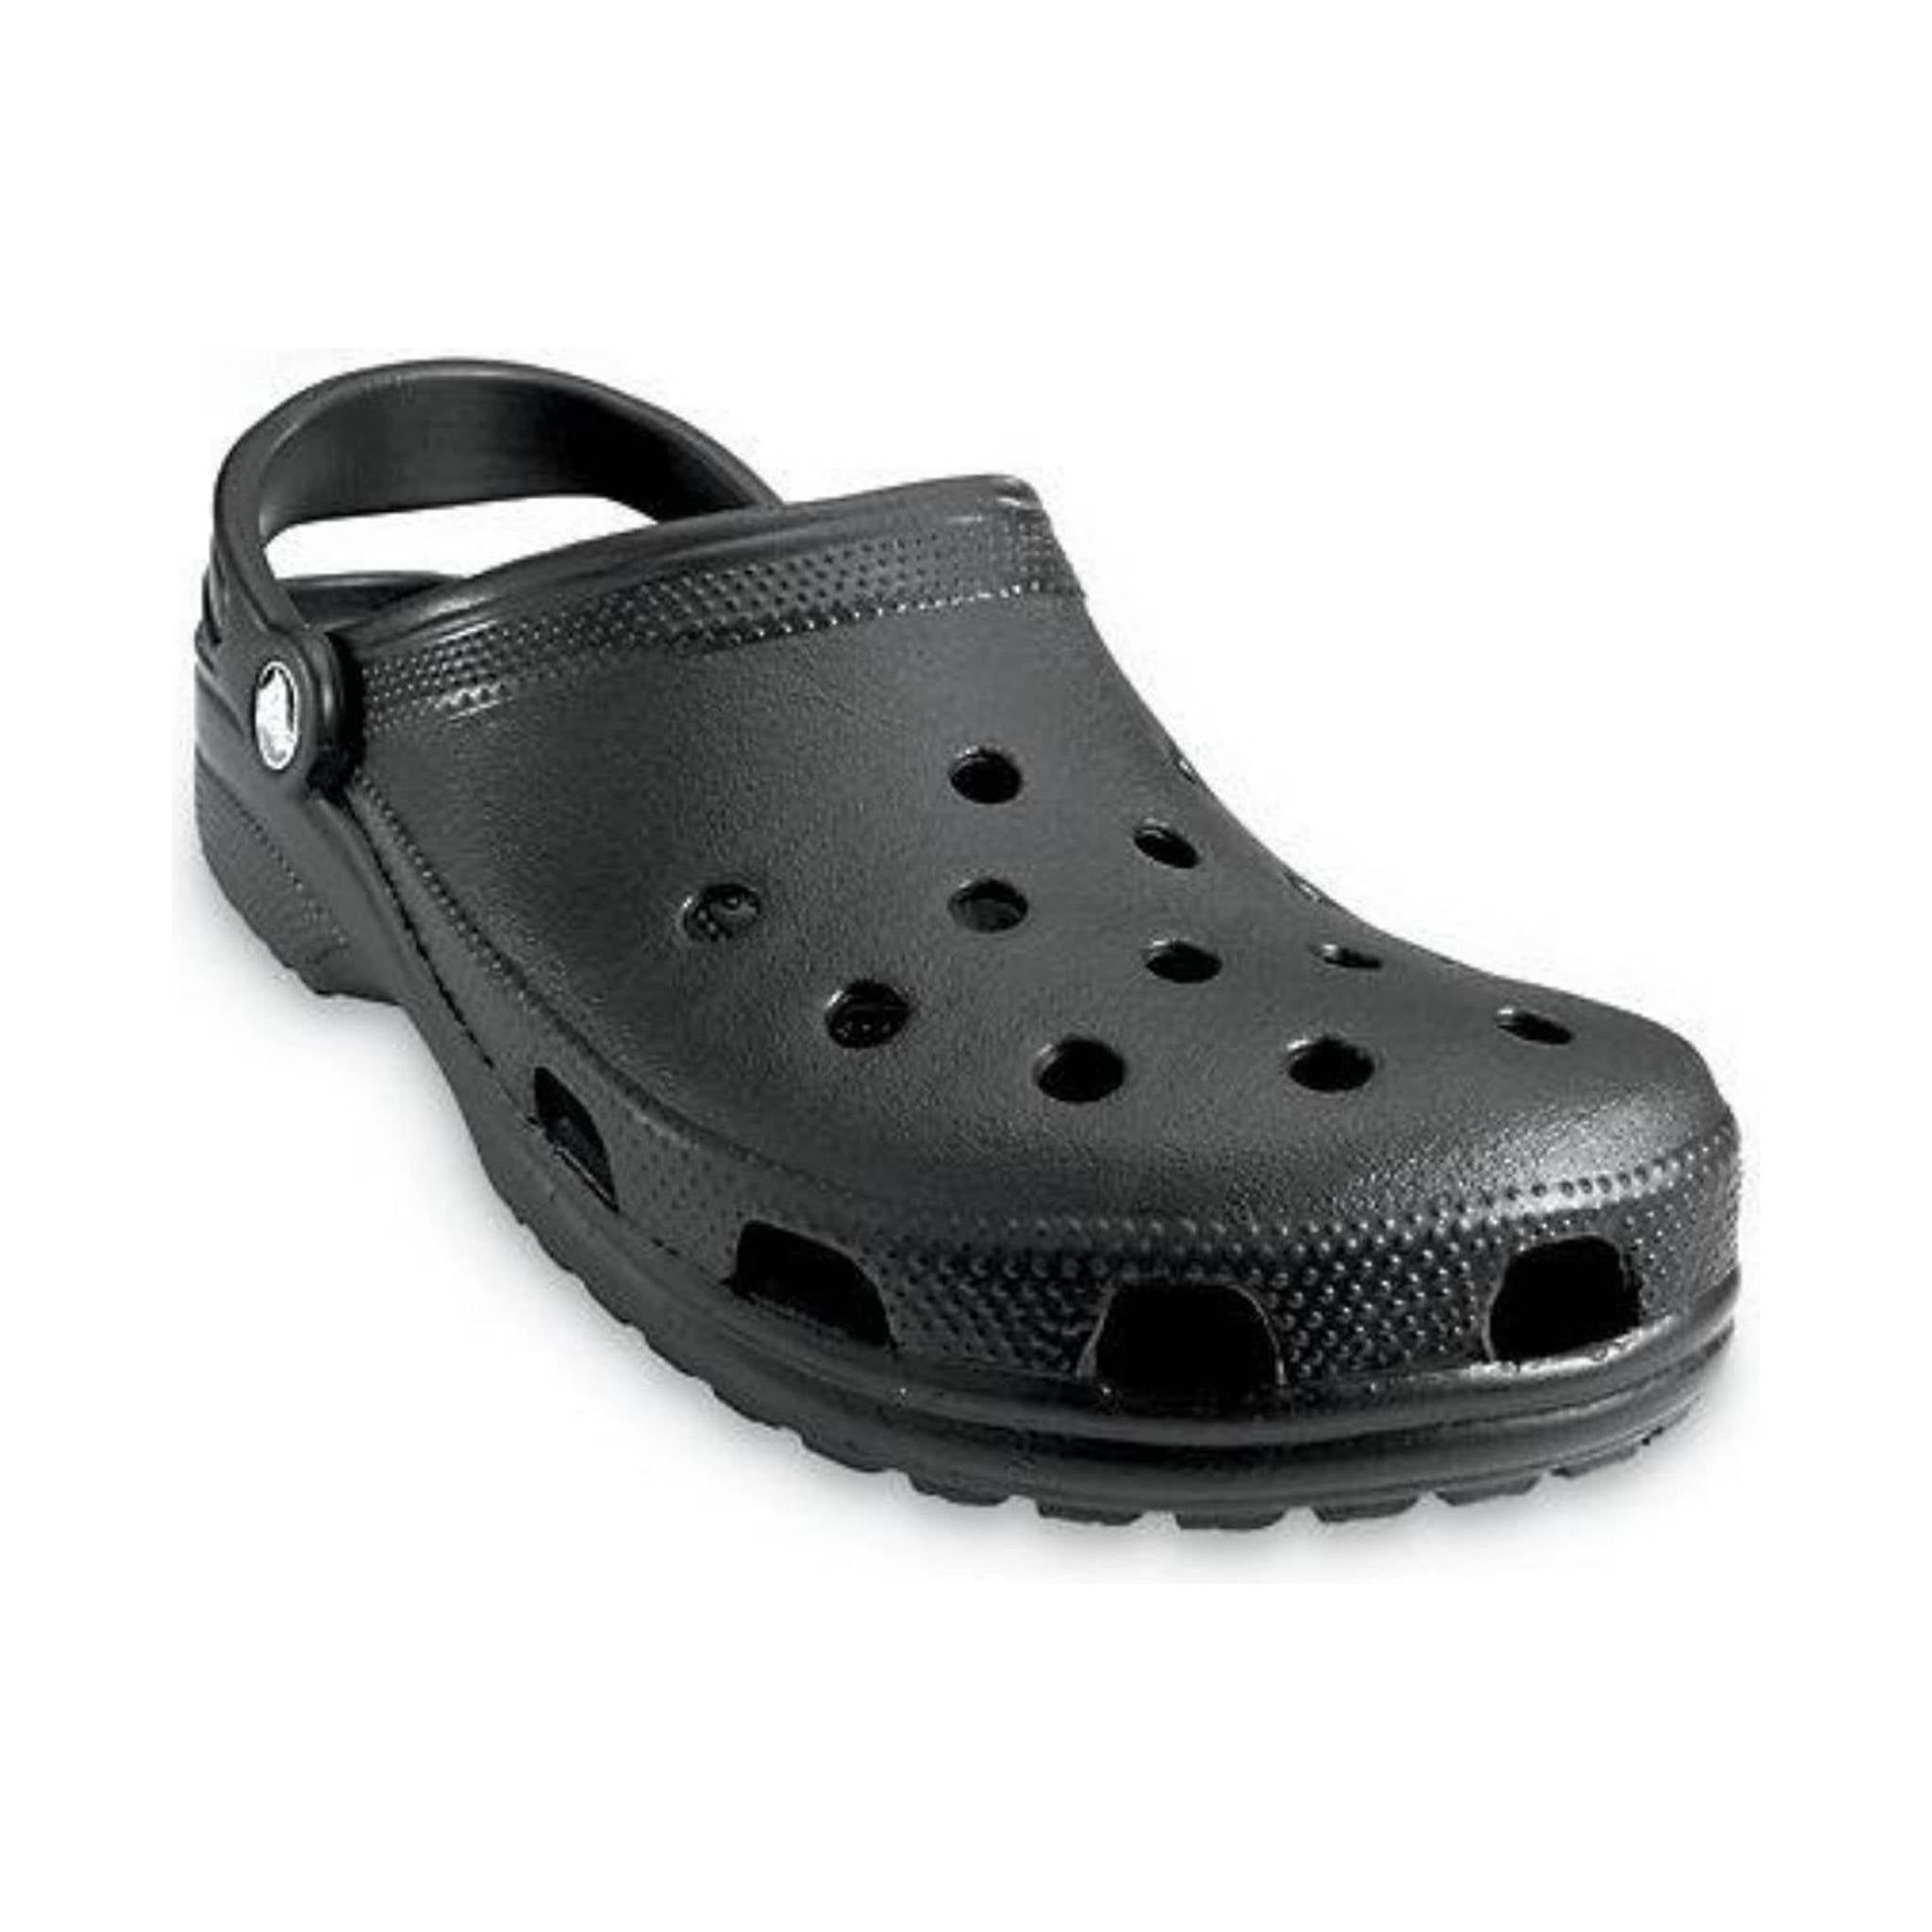 Crocs Classic Clog|Comfortable Slip On Casual Water Shoe, Black, 12 M US  Women / 10 M US Men